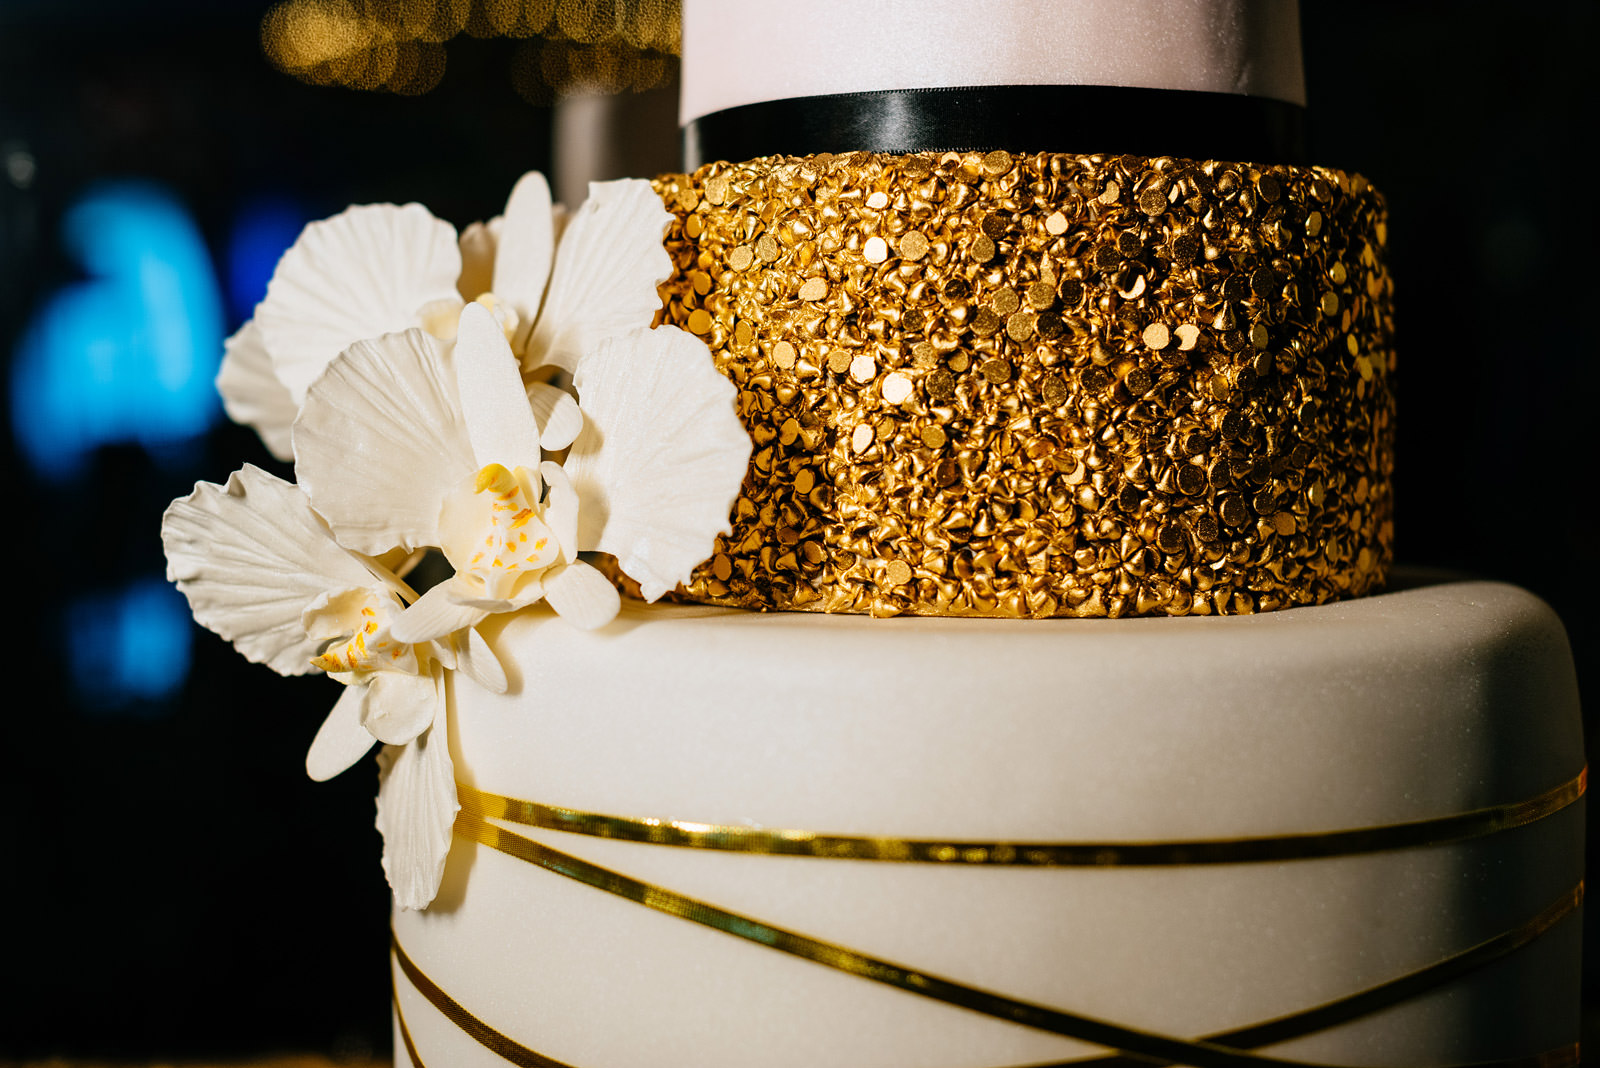 greenbrier resort golden wedding cake